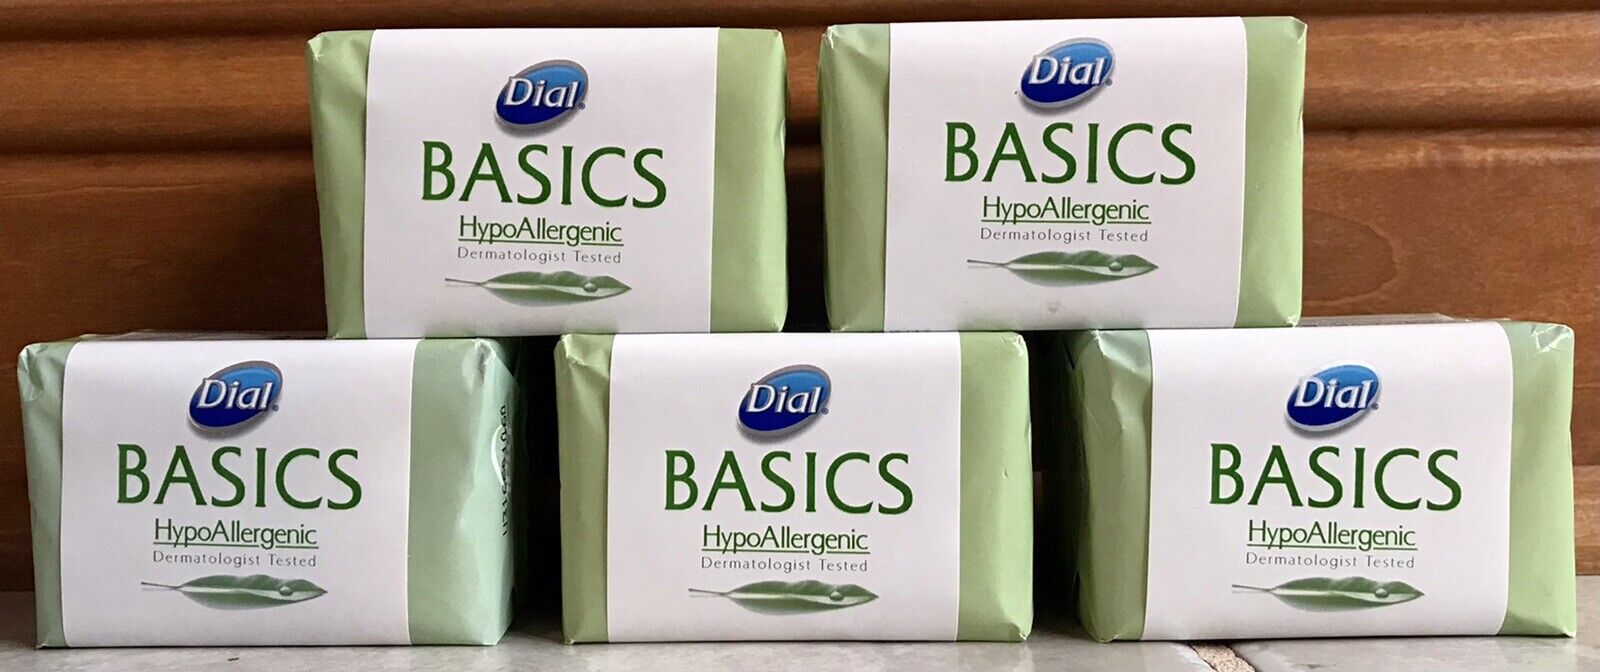 Dial Basics Hypo Allergenic Bar Soap, 3.2 oz, Lot of 5 Packs 10 Bars